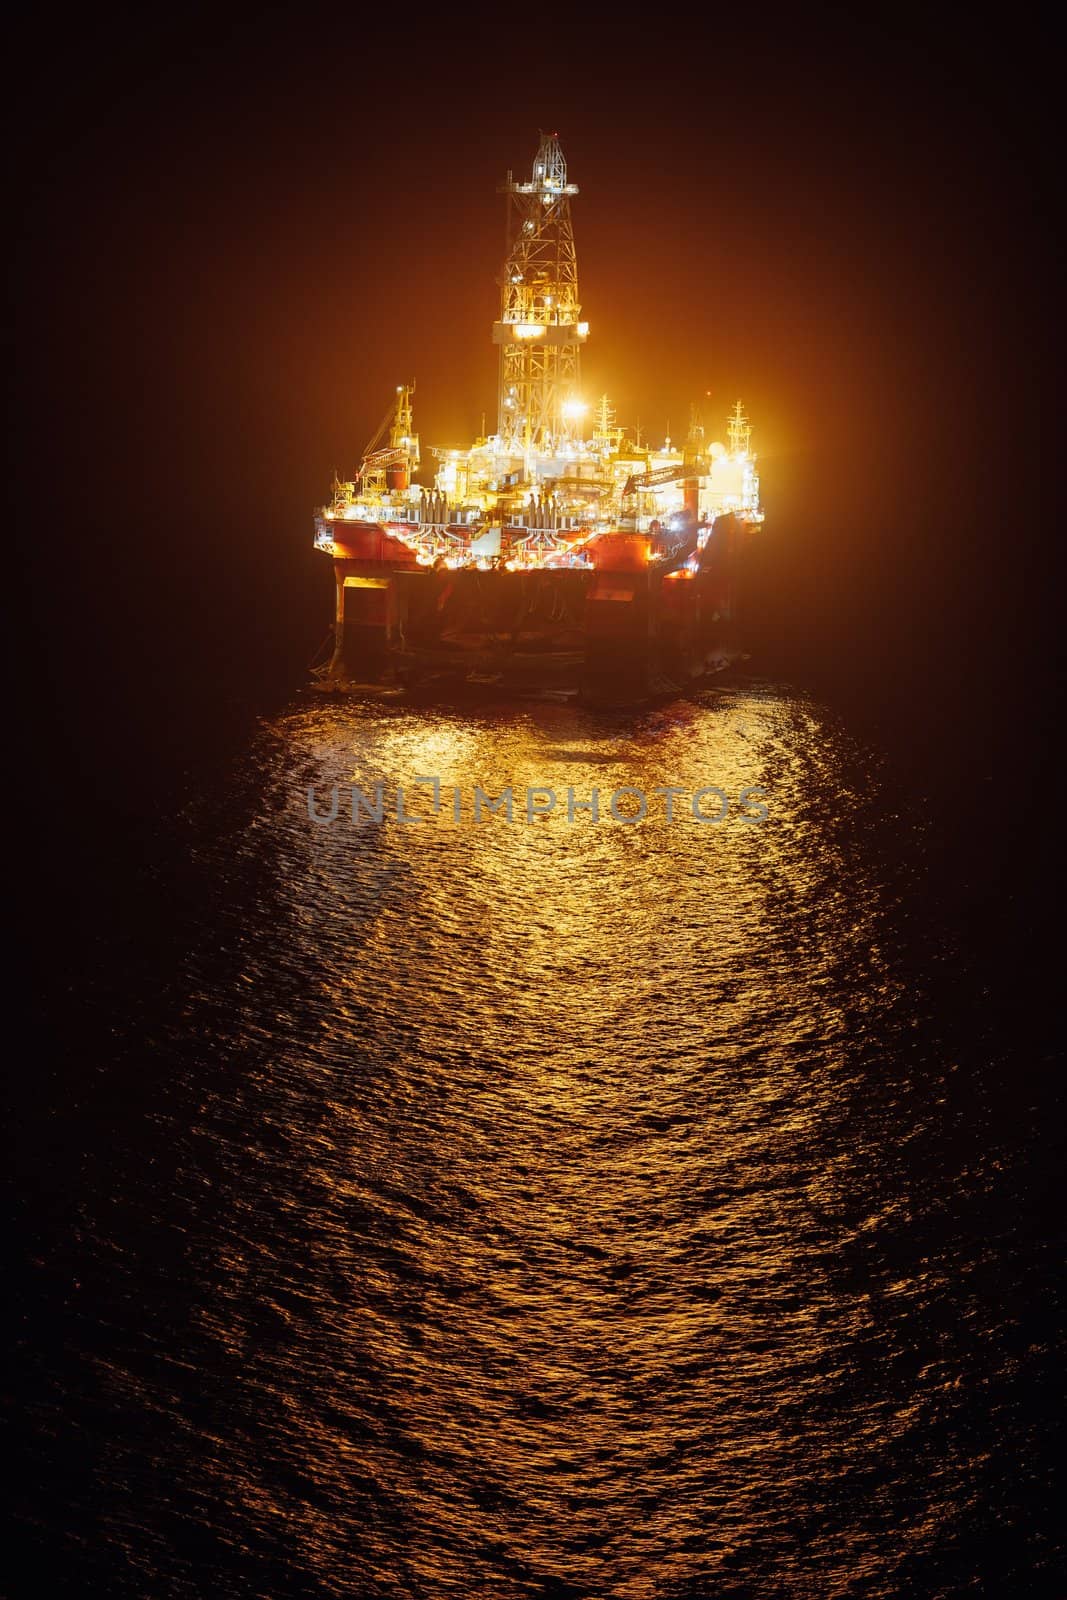 offshore oil platform at night by nikkytok